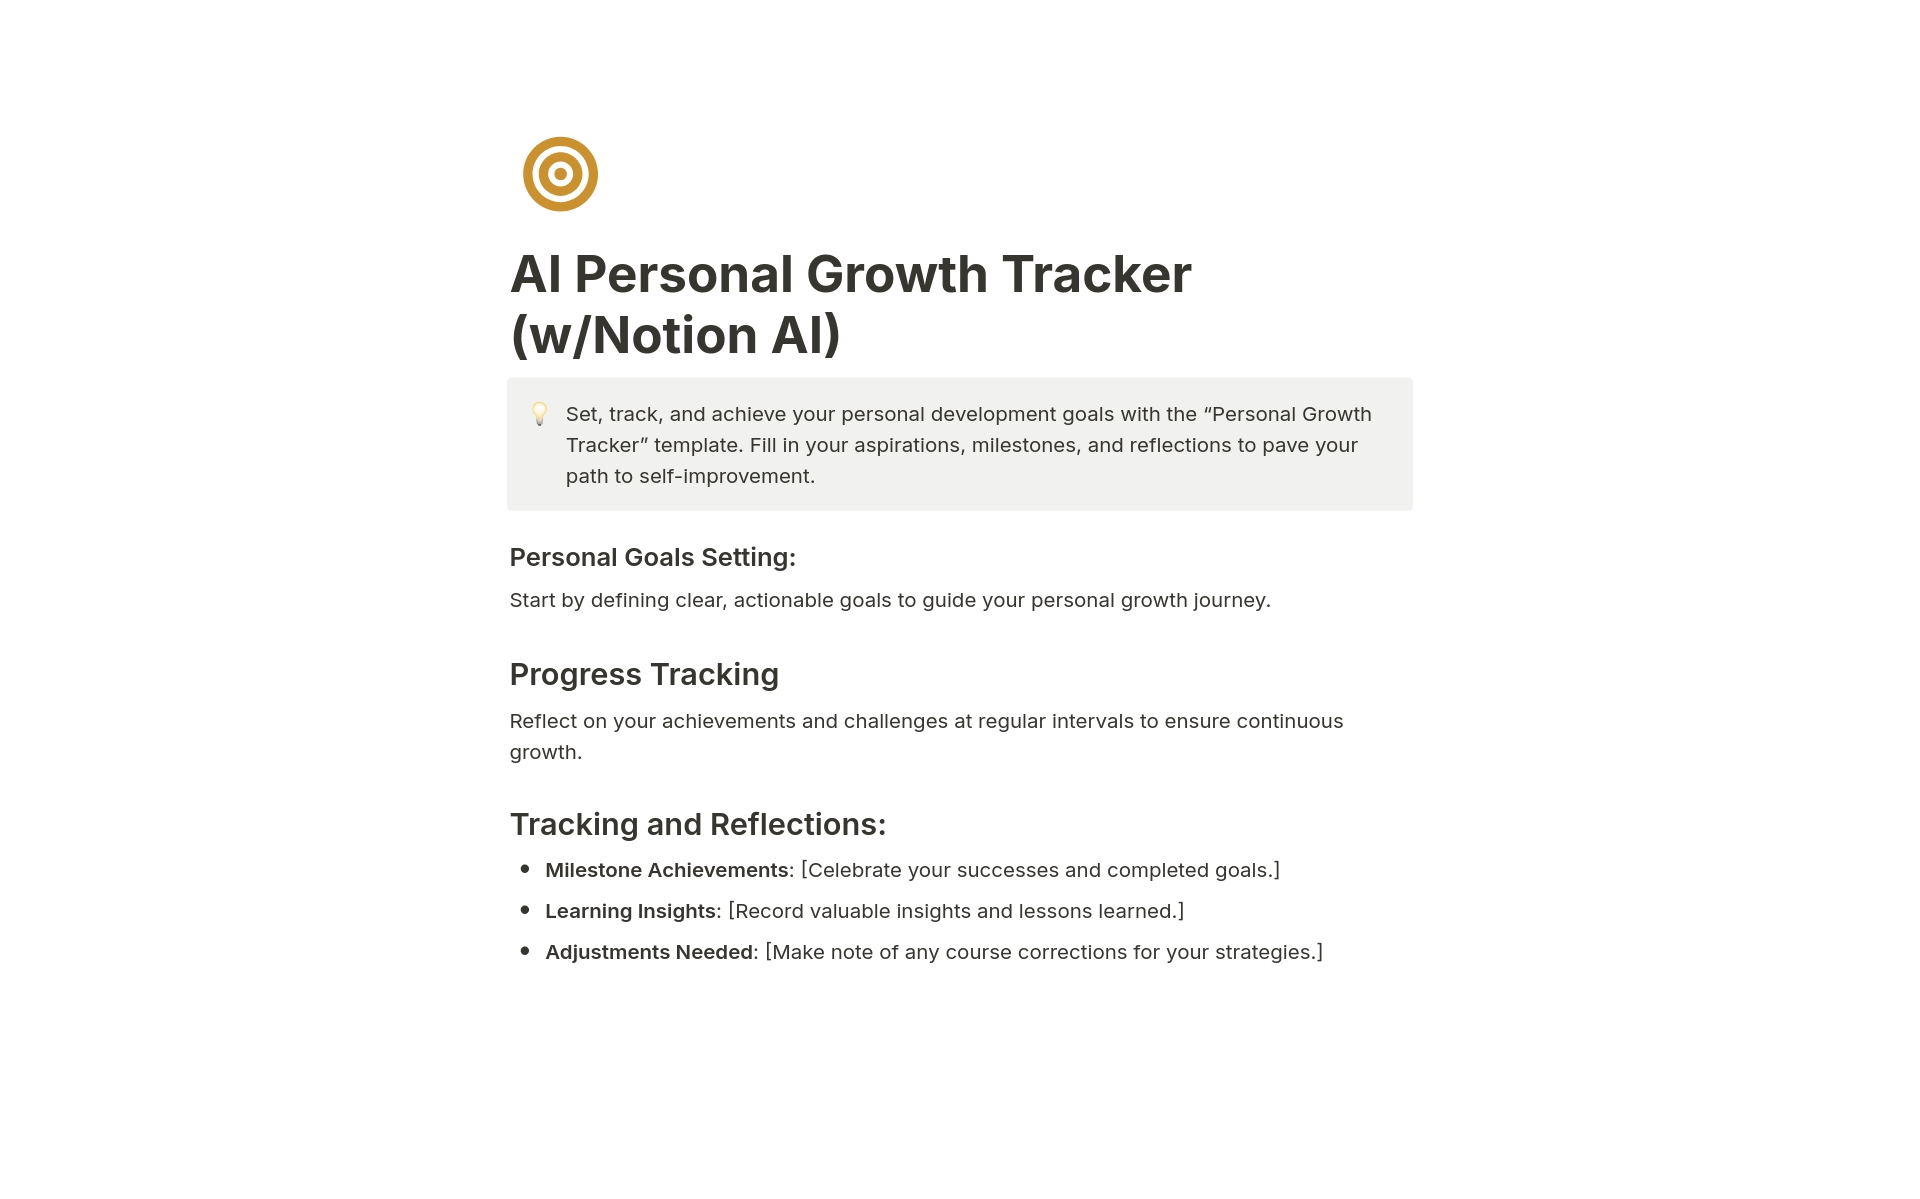 Vista previa de una plantilla para AI Personal Growth Tracker